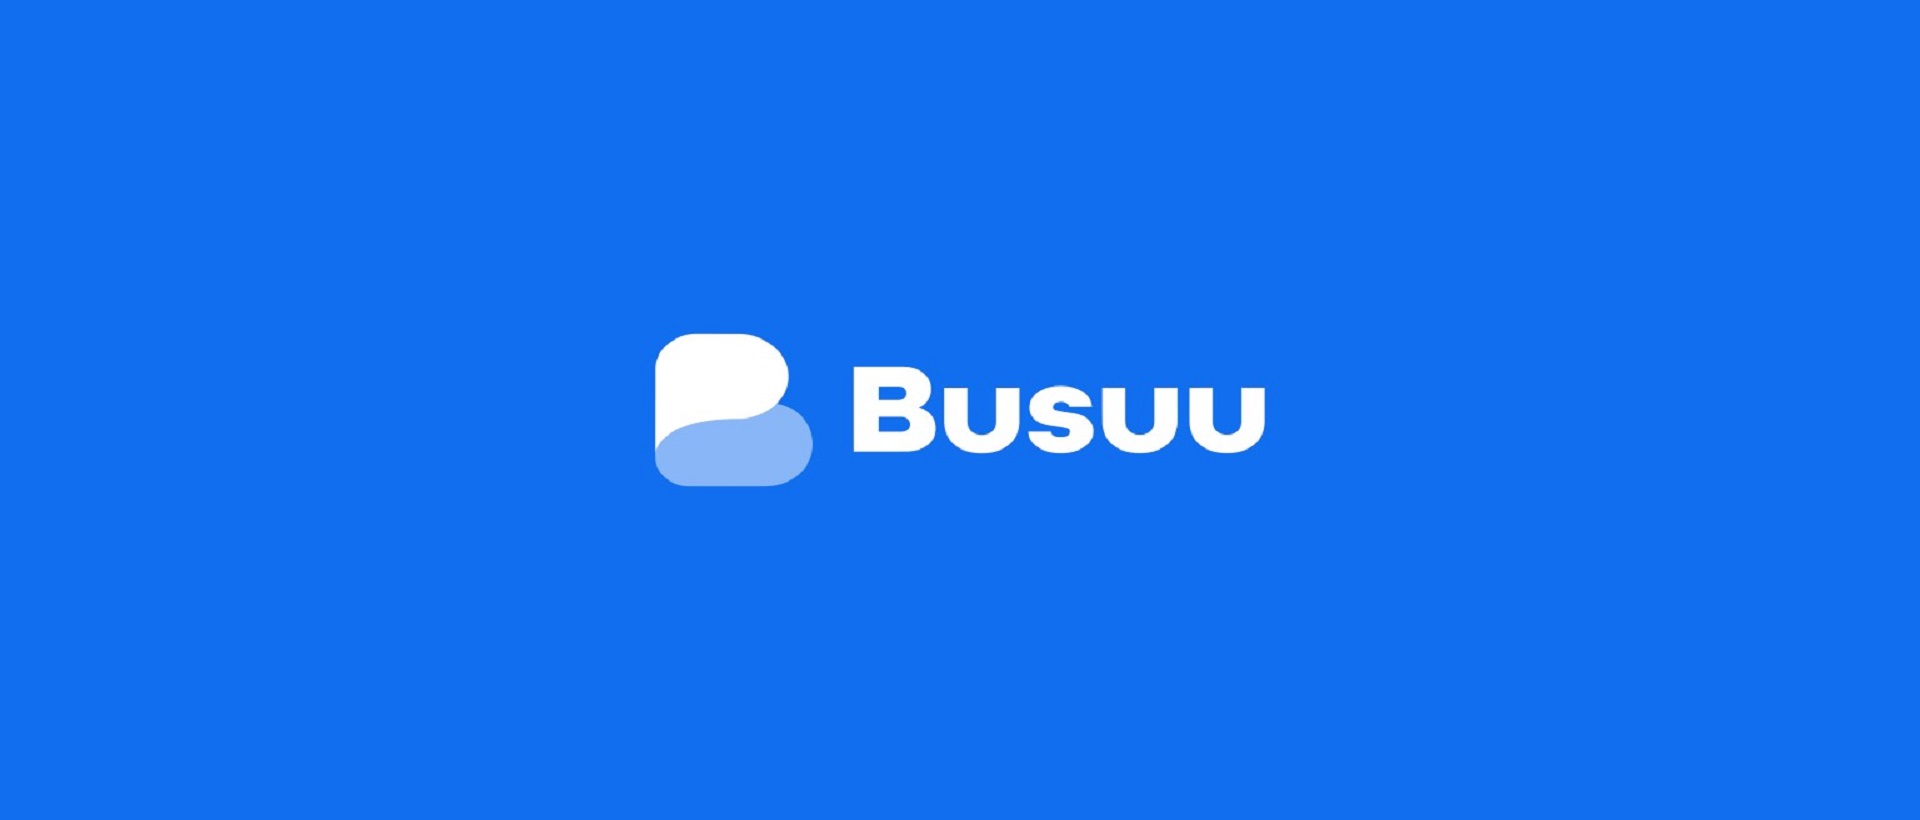 Busuu PC 버전, 컴퓨터에서 설치하고 안전하게 즐기자 - 녹스 앱플레이어